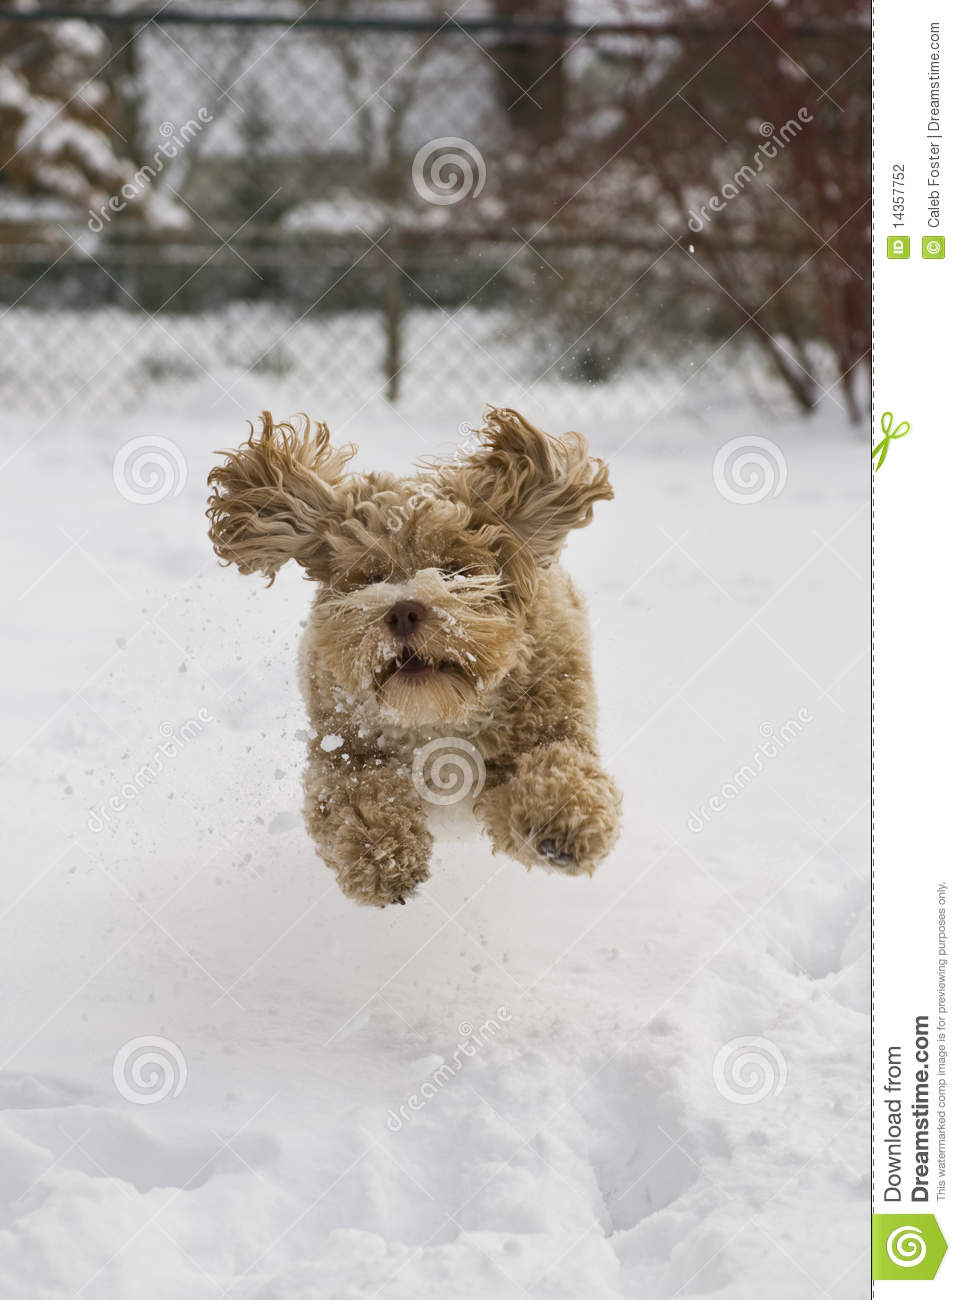 cute-puppy-playing-snow-14357752.jpg